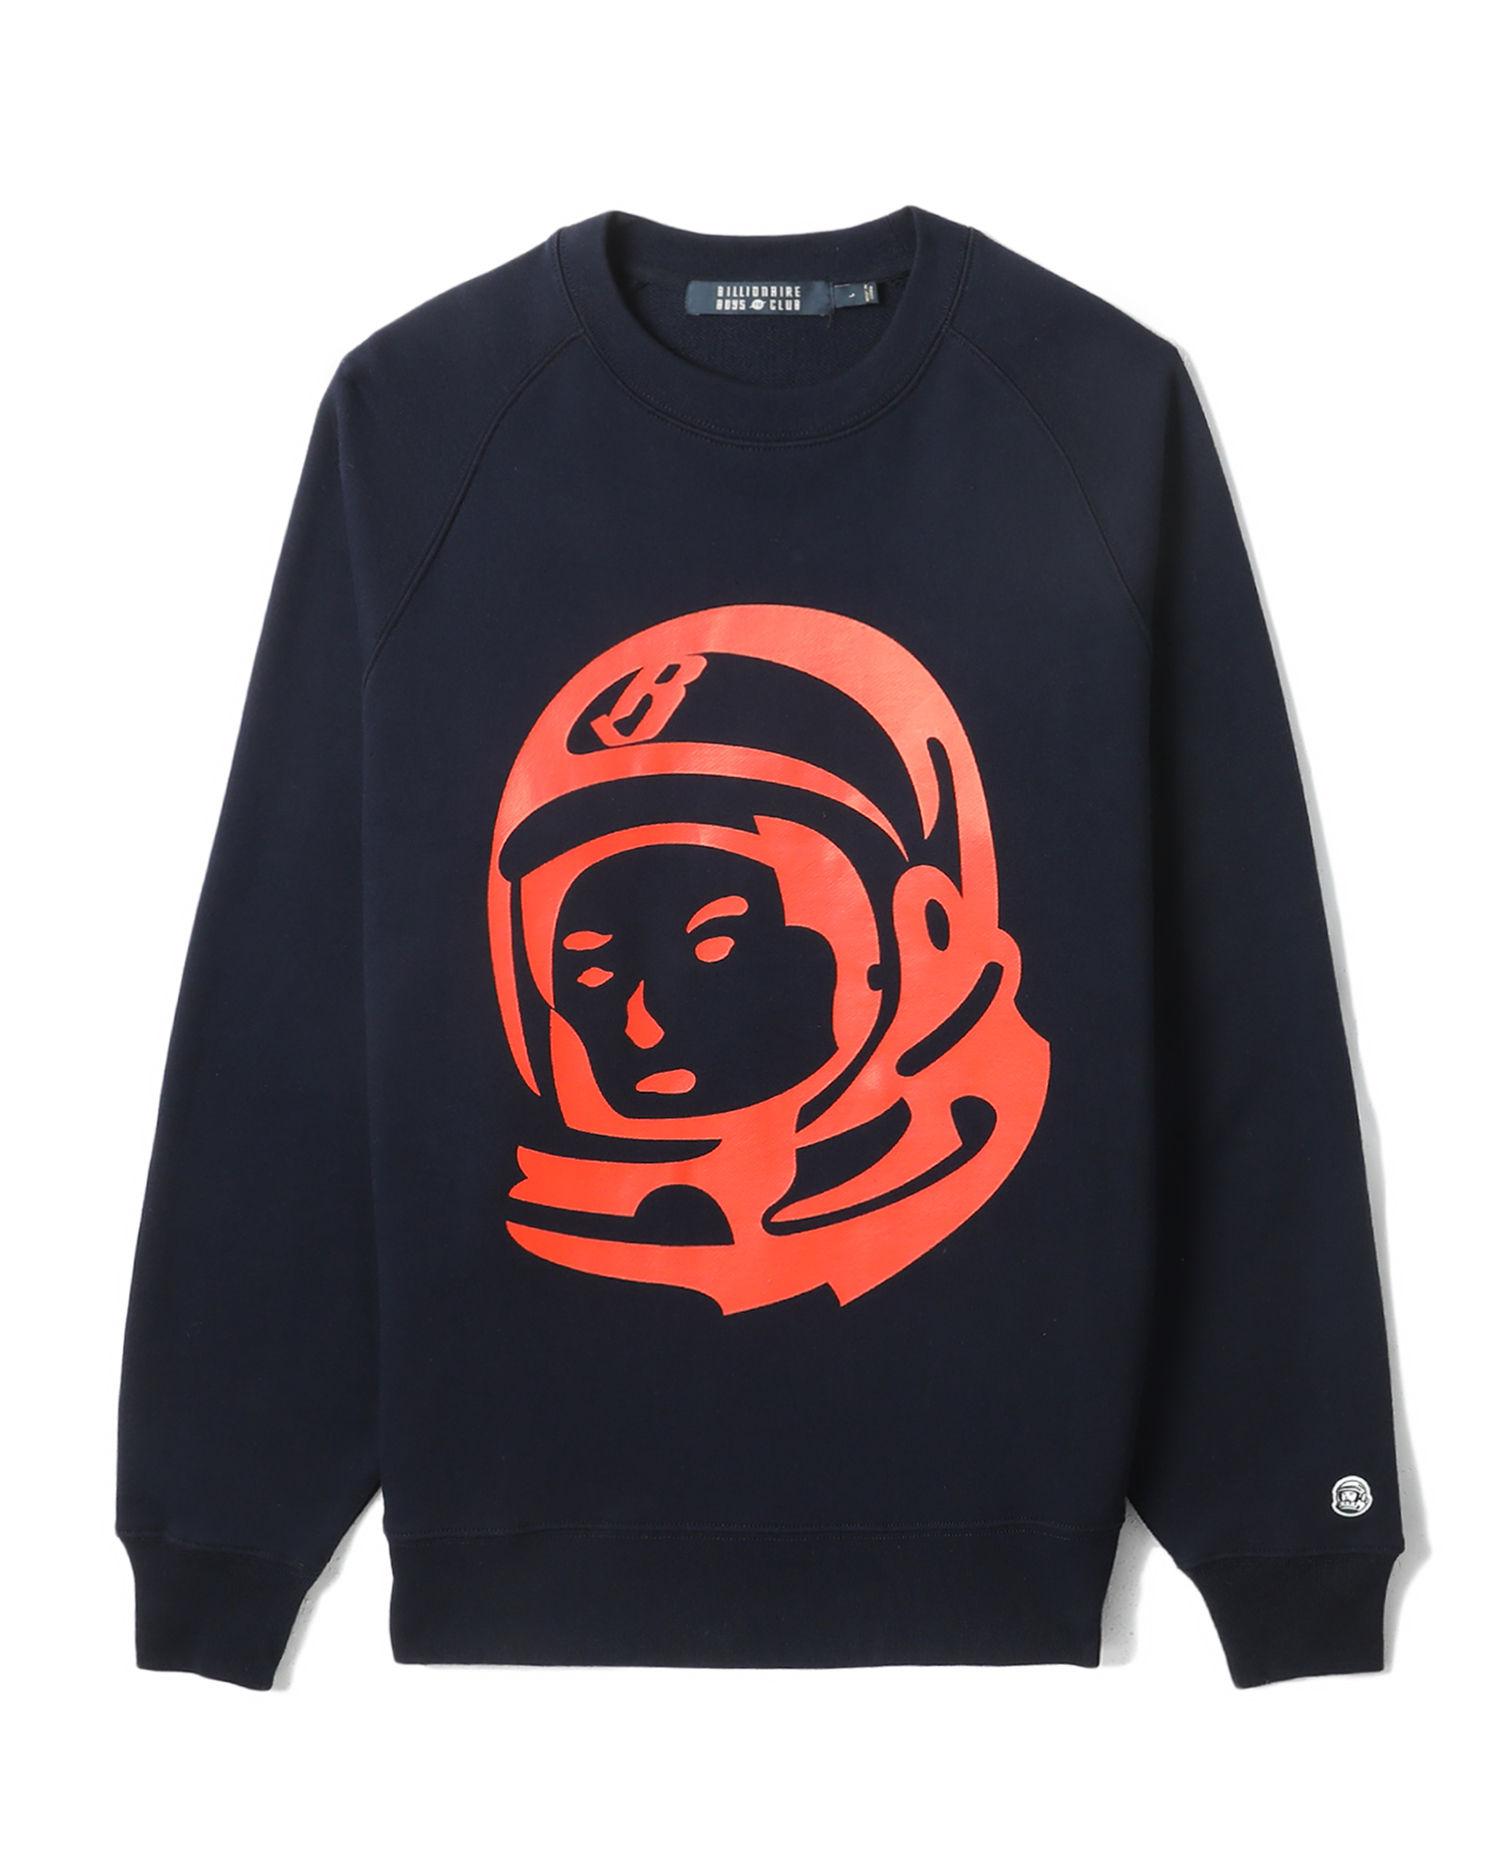 Spacetime sweatshirt by BILLIONAIRE BOYS CLUB